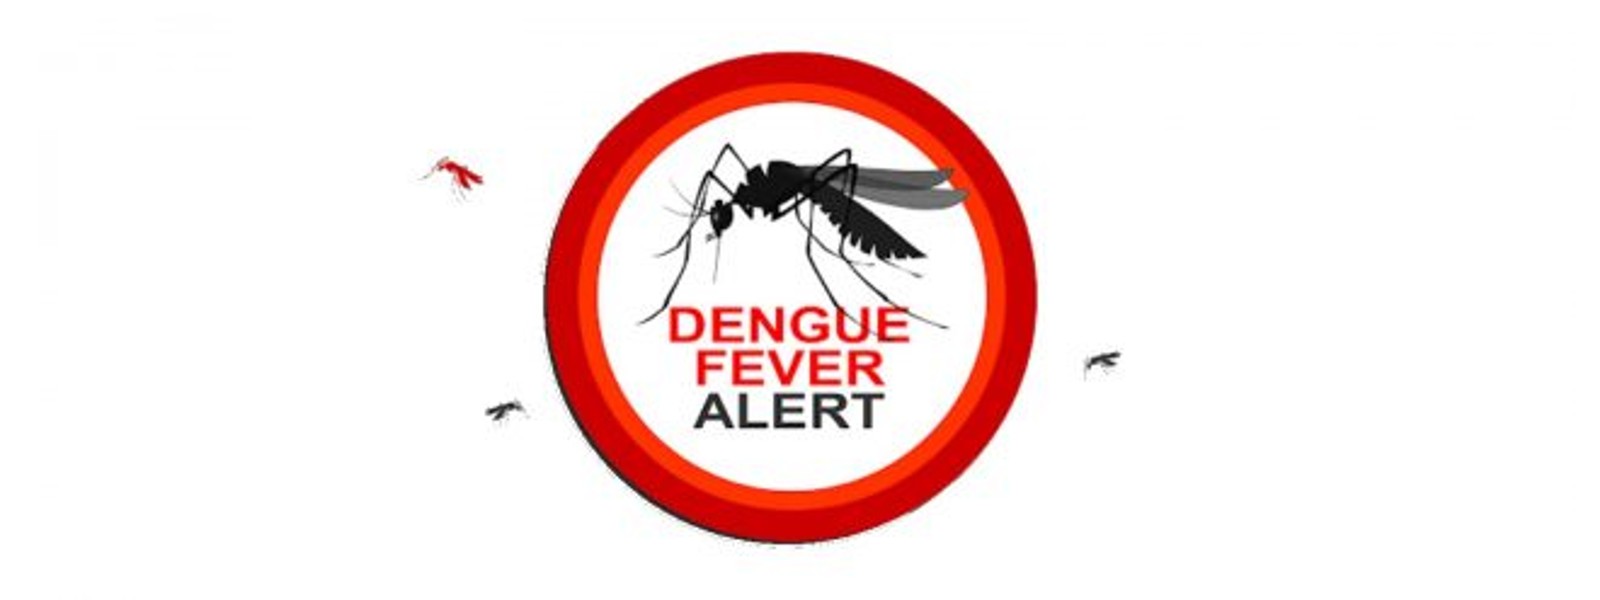 1,500 Dengue cases being reported per week